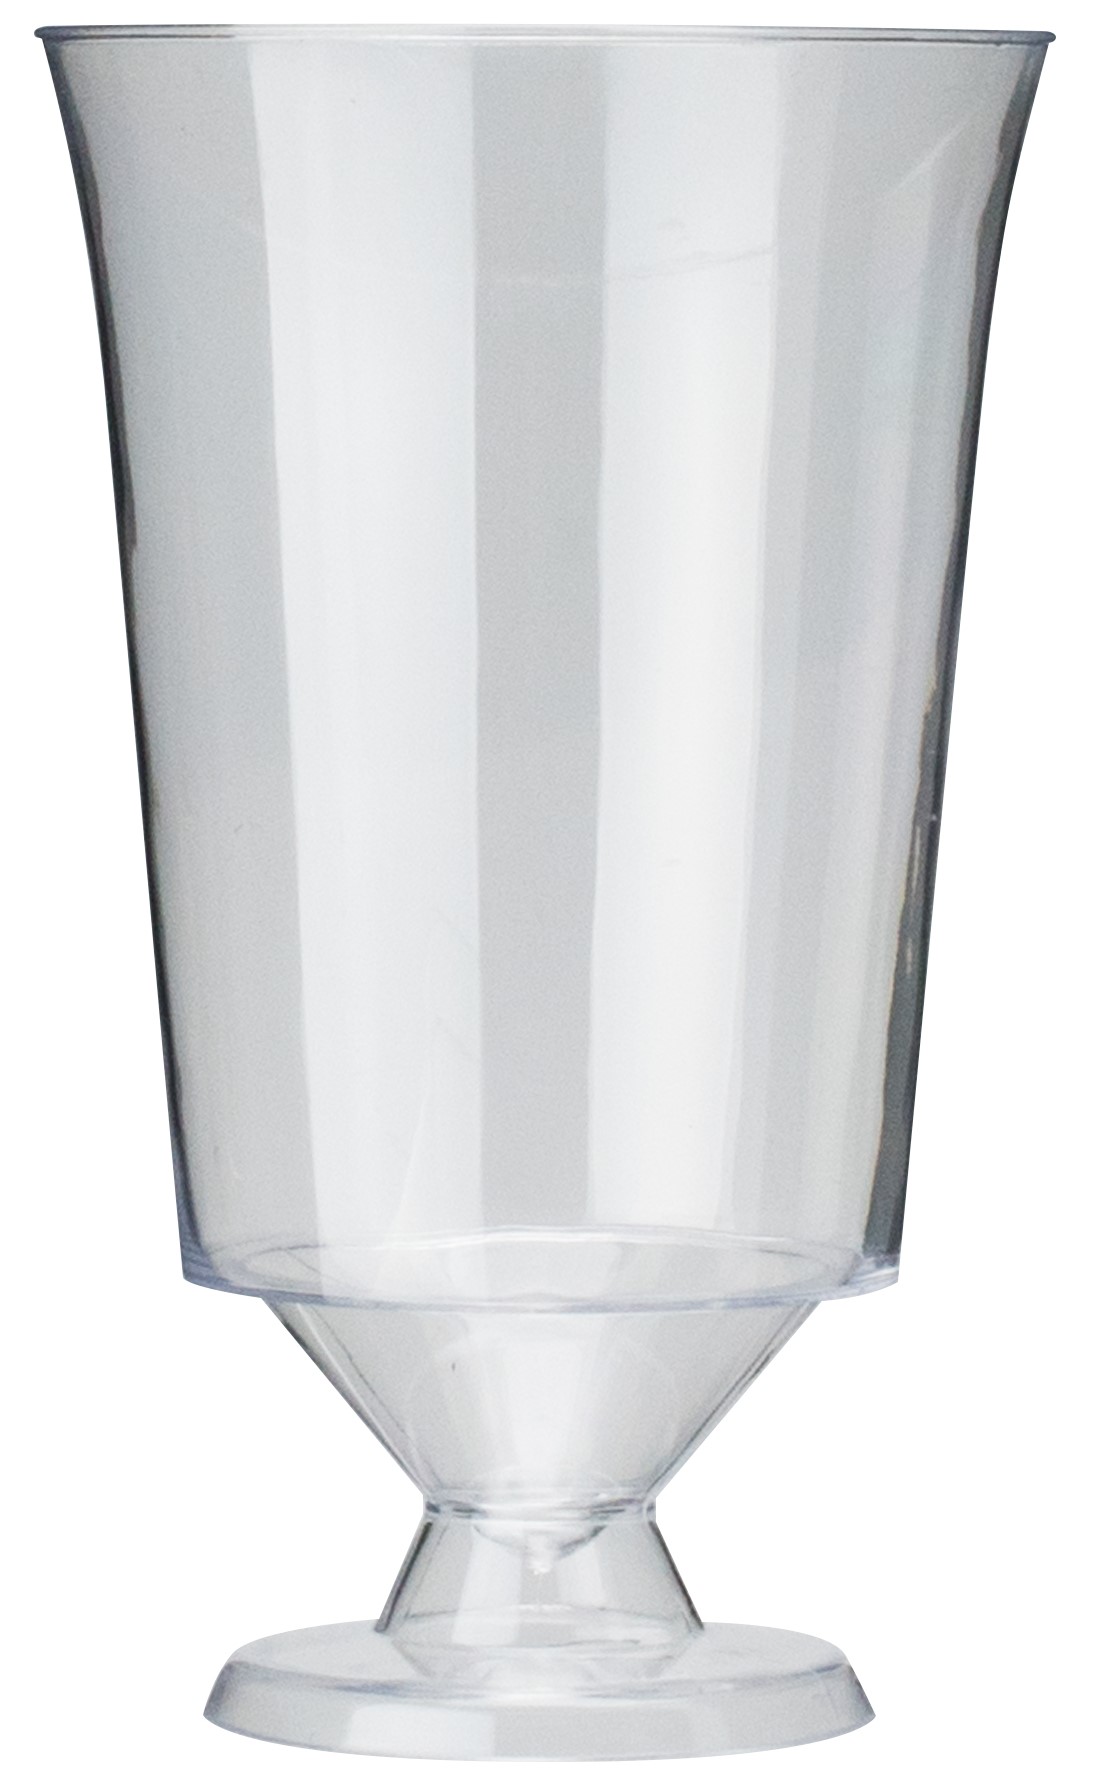 PLASTIC WINE GLASS 175ML 10PK